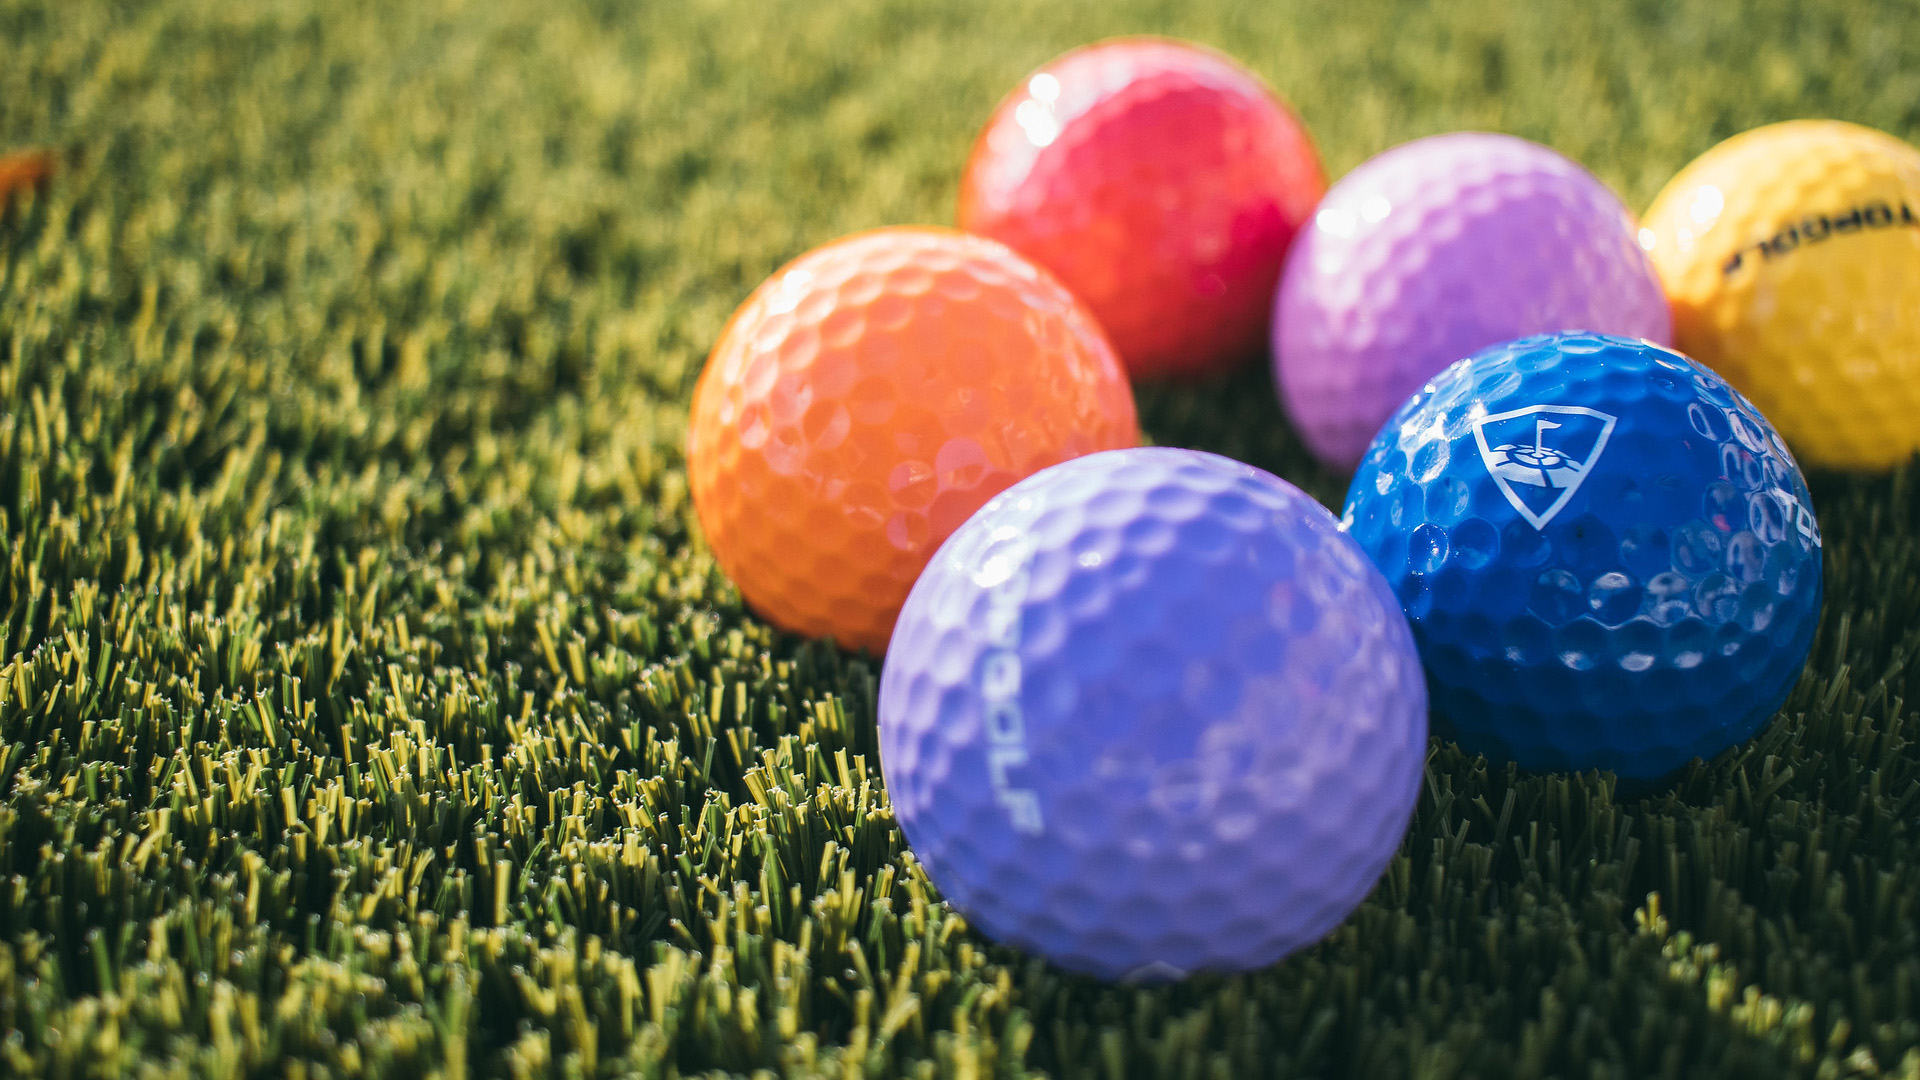 Golf Balls for Mini Golf at Topgolf